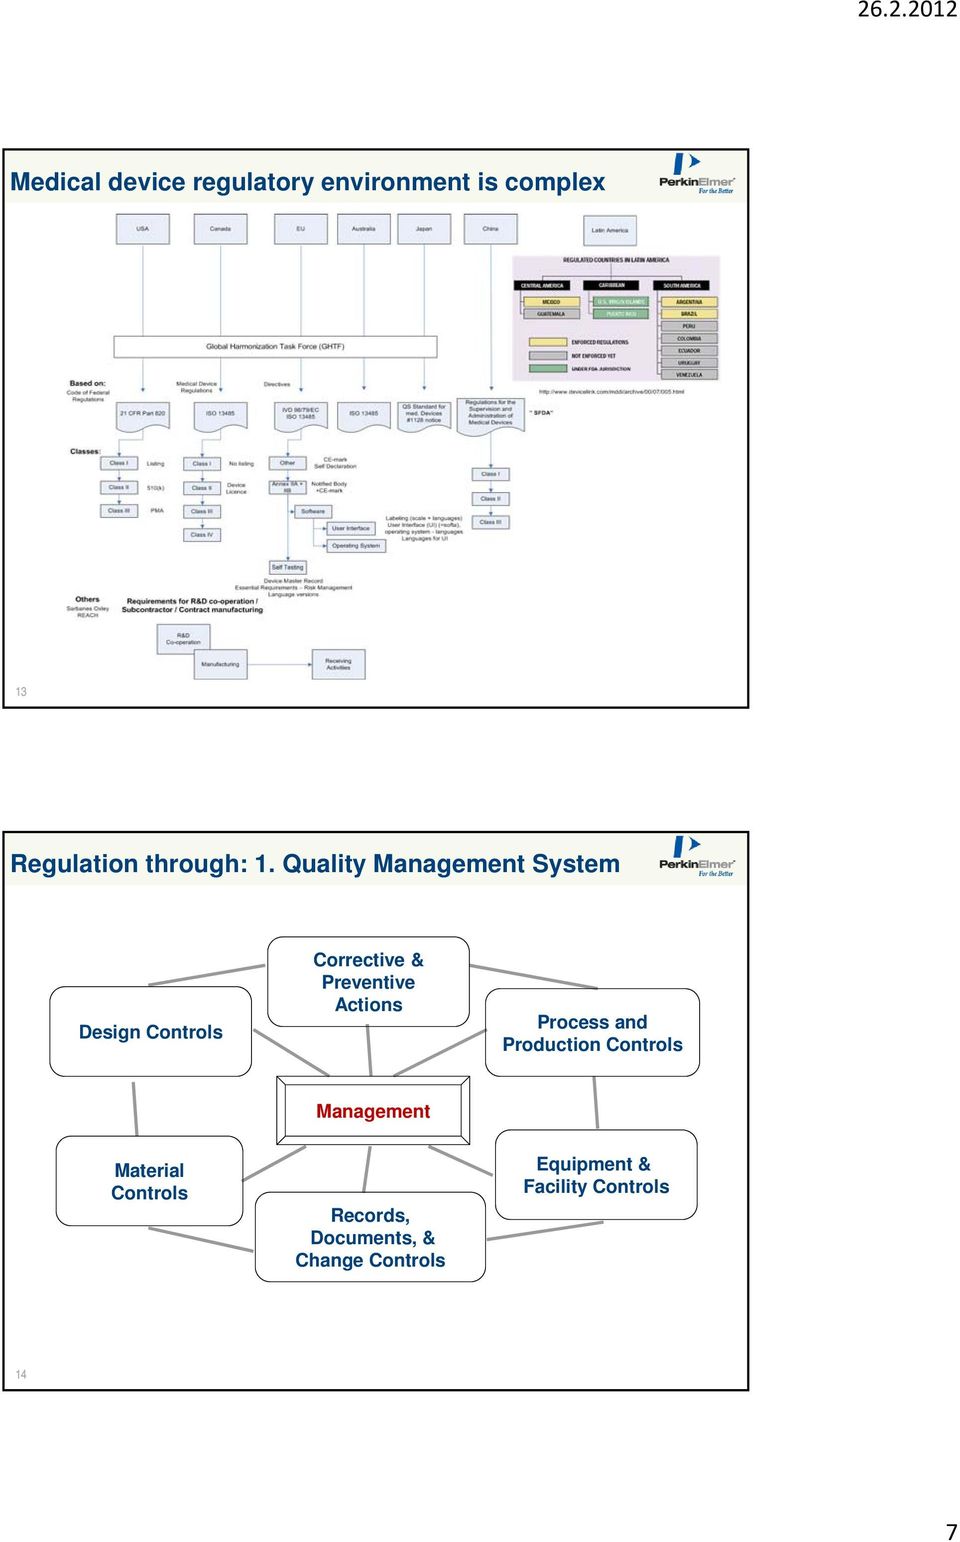 Quality Management System Design Controls Corrective & Preventive